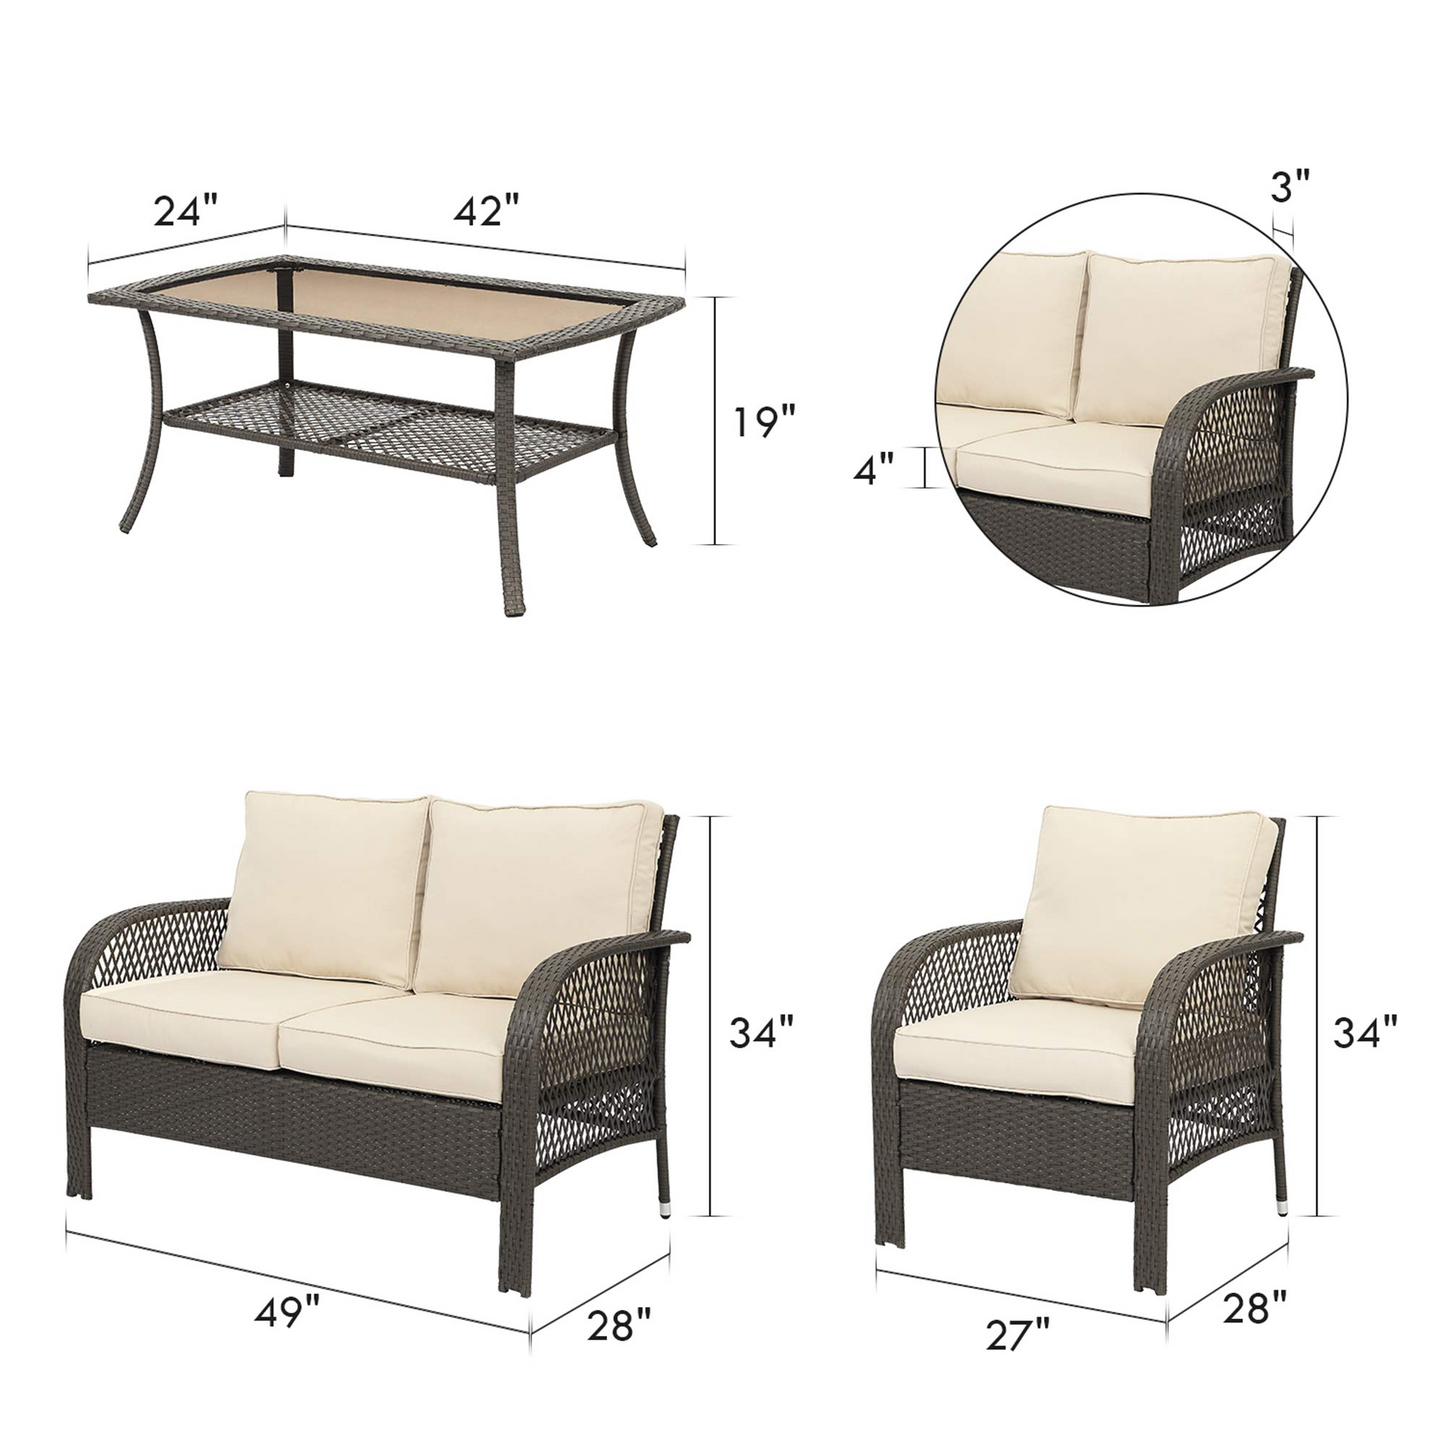 4 Pieces Outdoor Wicker Furniture Set